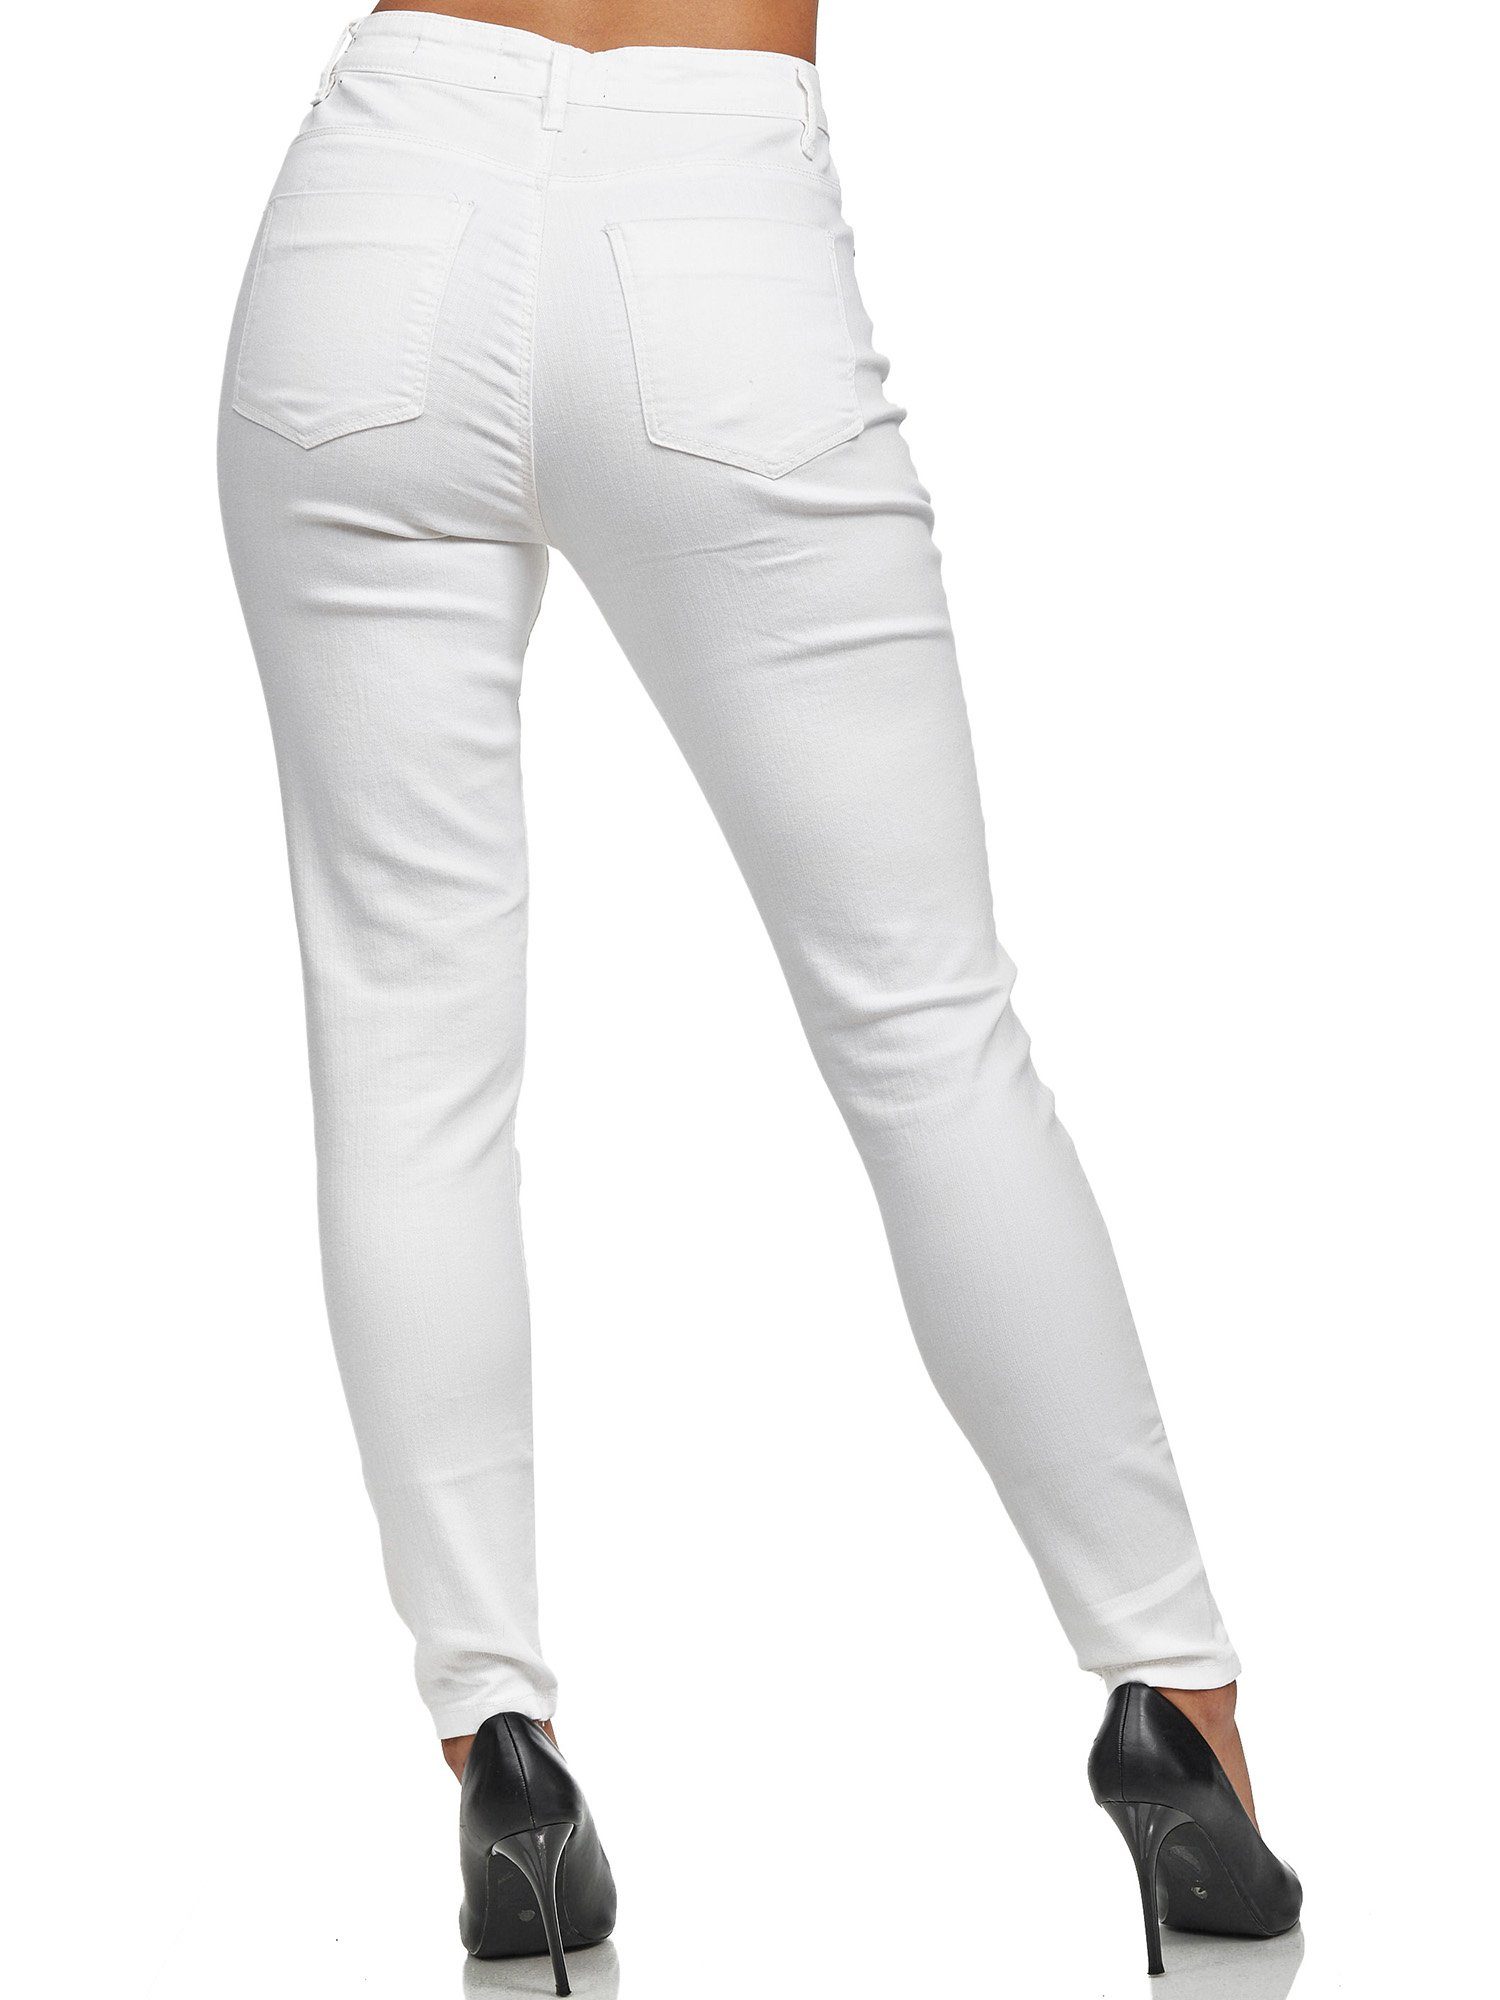 Skinny Tazzio Damen F101 weiß Jeanshose Fit High-waist-Jeans